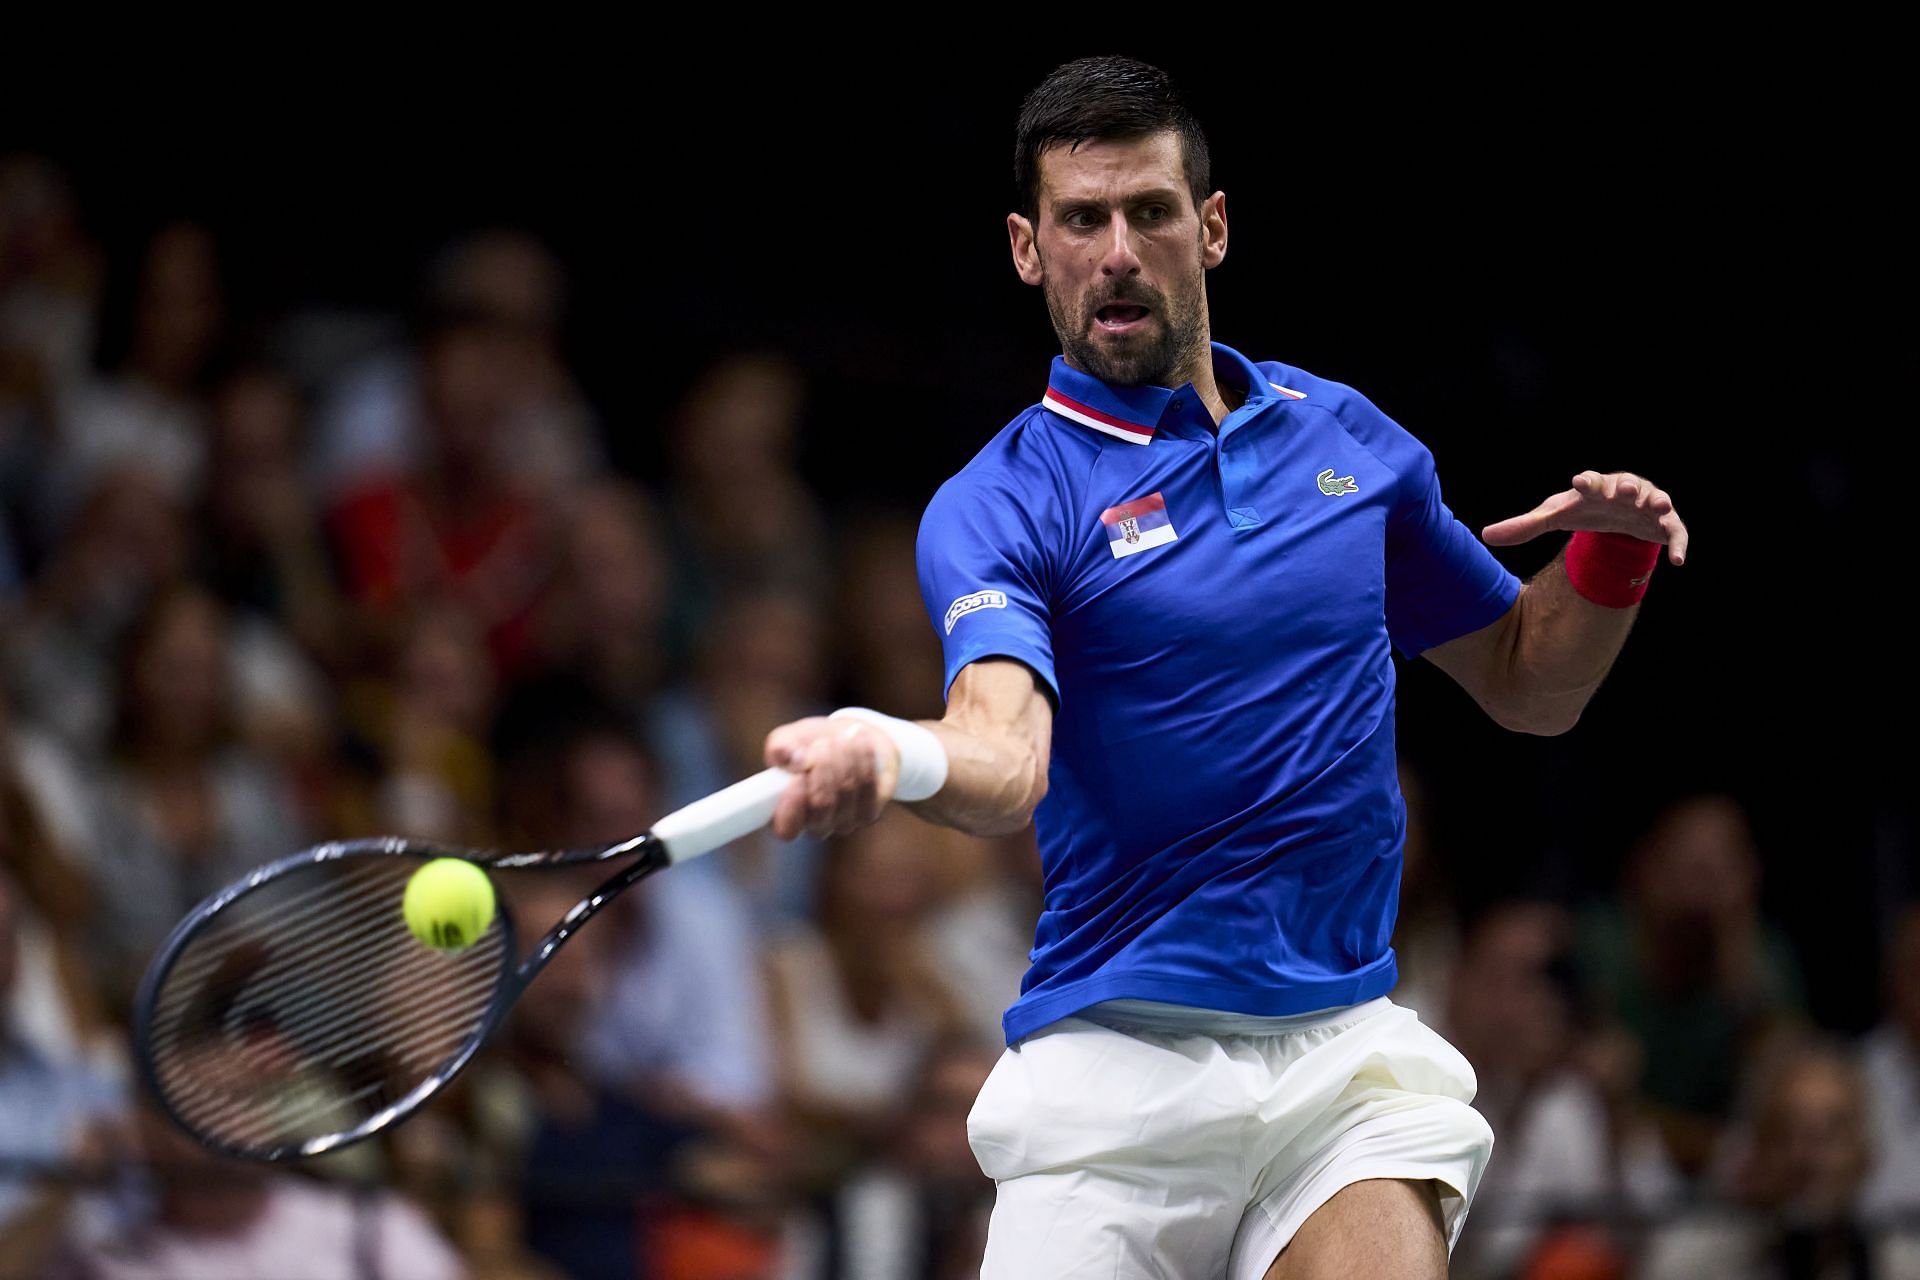 Novak Djokovic in action at the Davis Cup Finals